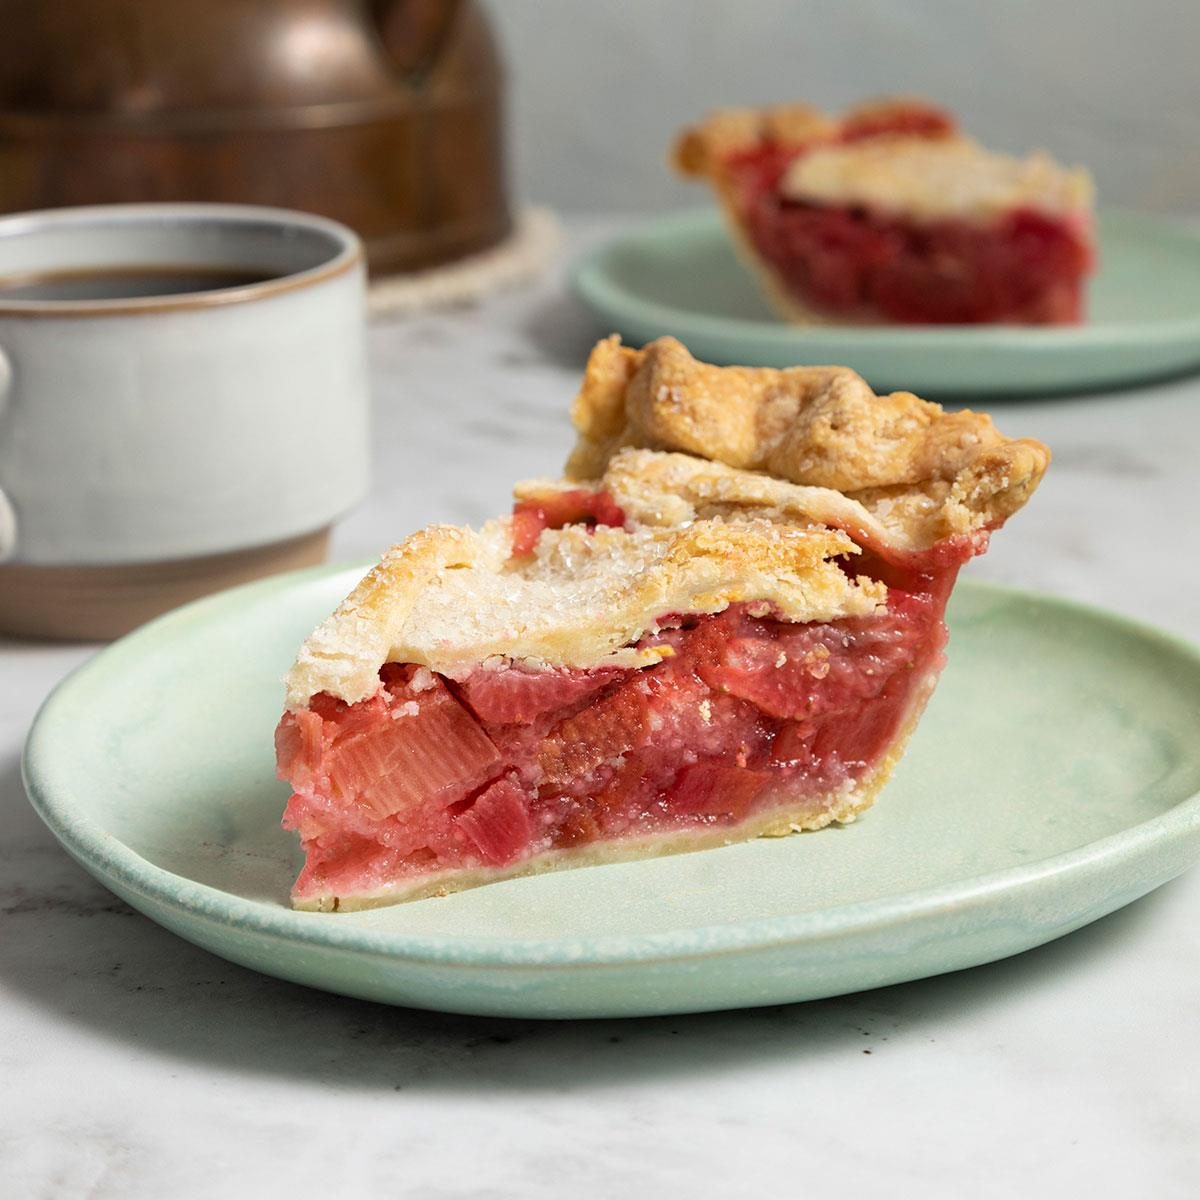 Strawberry Rhubarb Pie Recipe: How to Make It